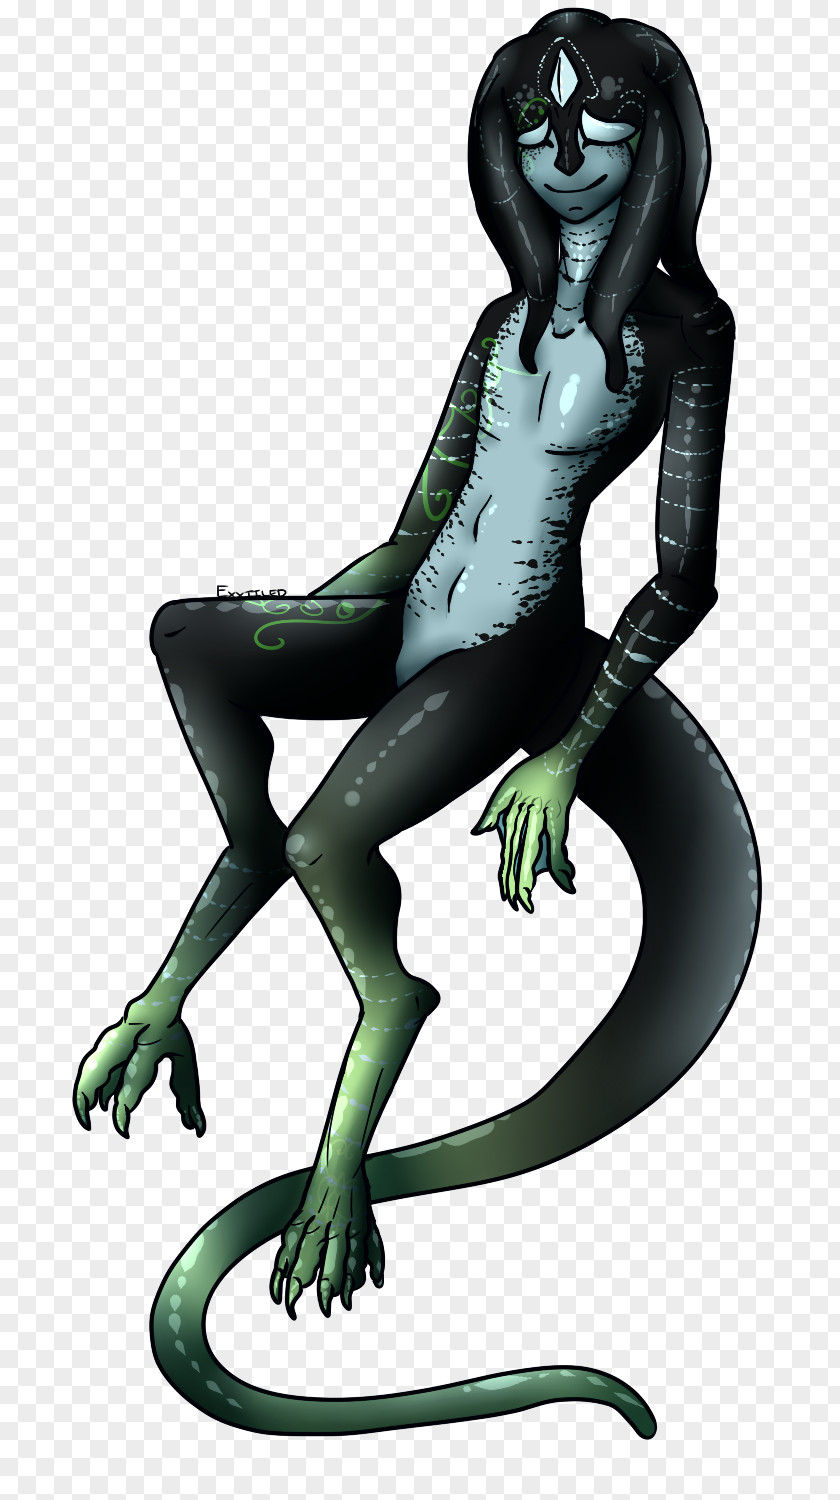 Frog Reptile Cartoon Legendary Creature PNG